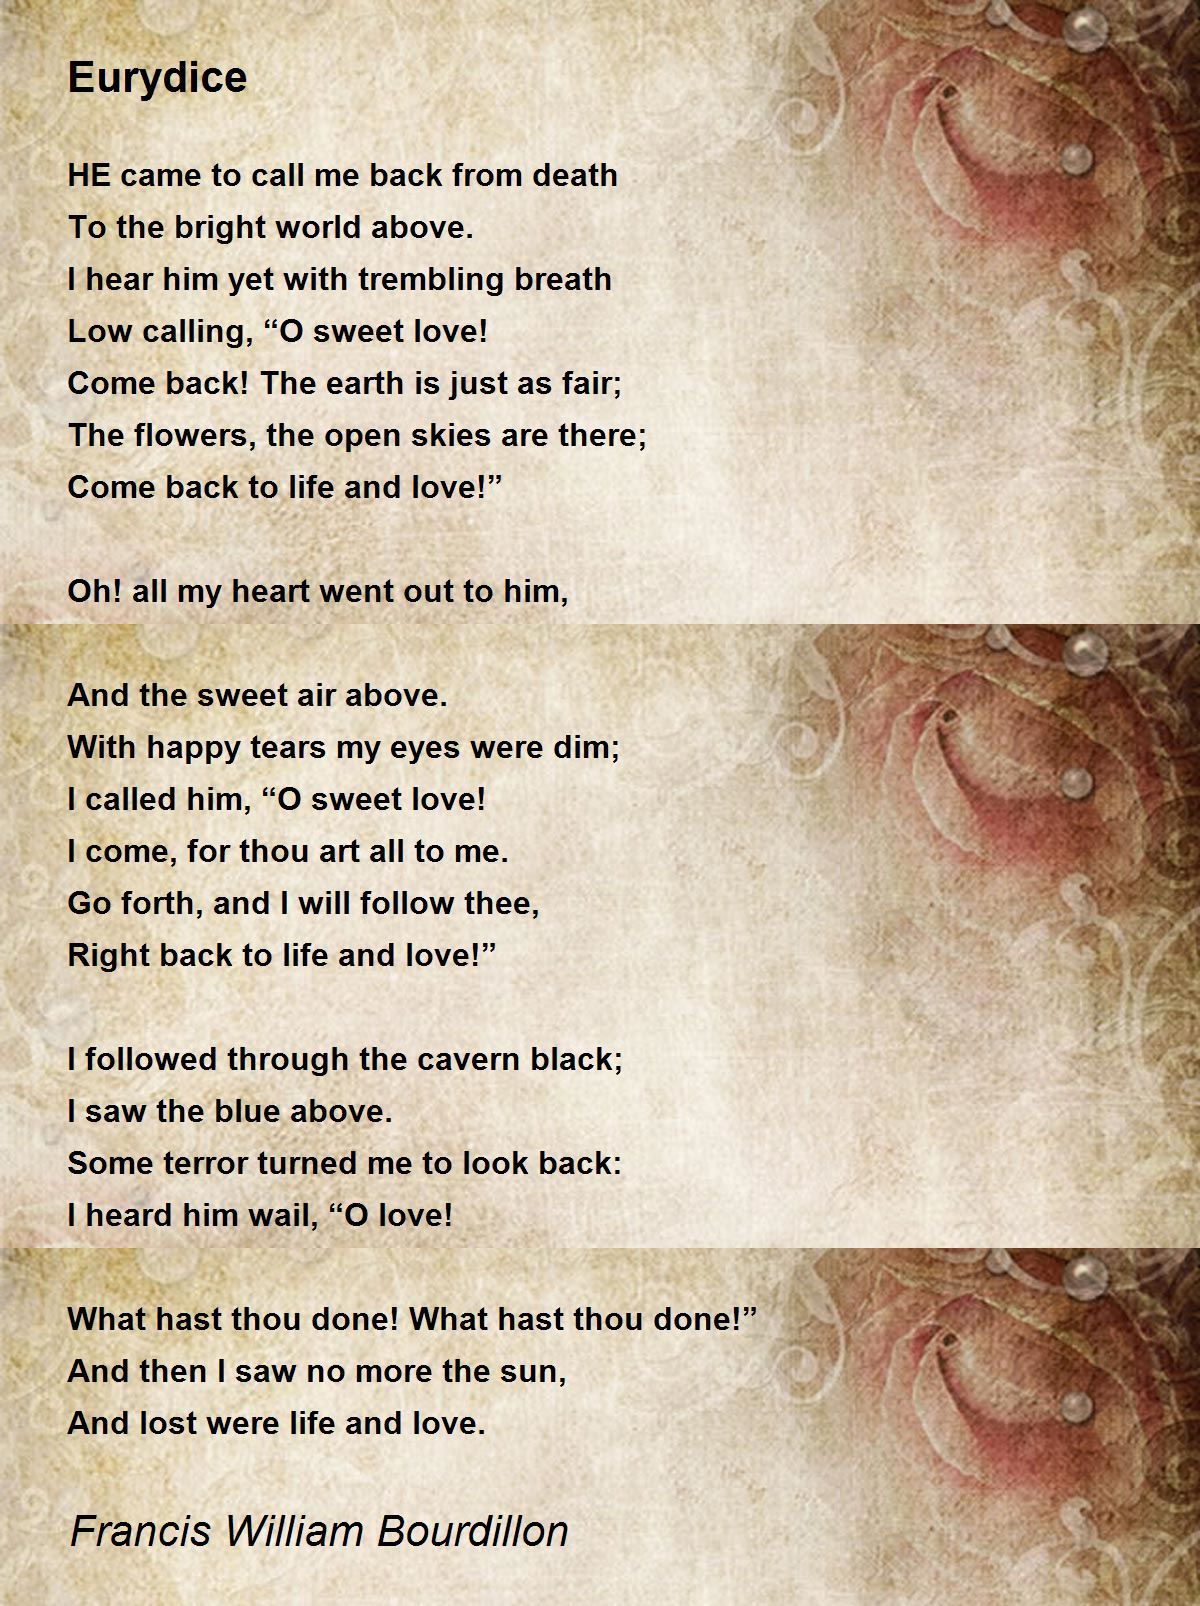 Eurydice Poem by Francis William Bourdillon - Poem Hunter